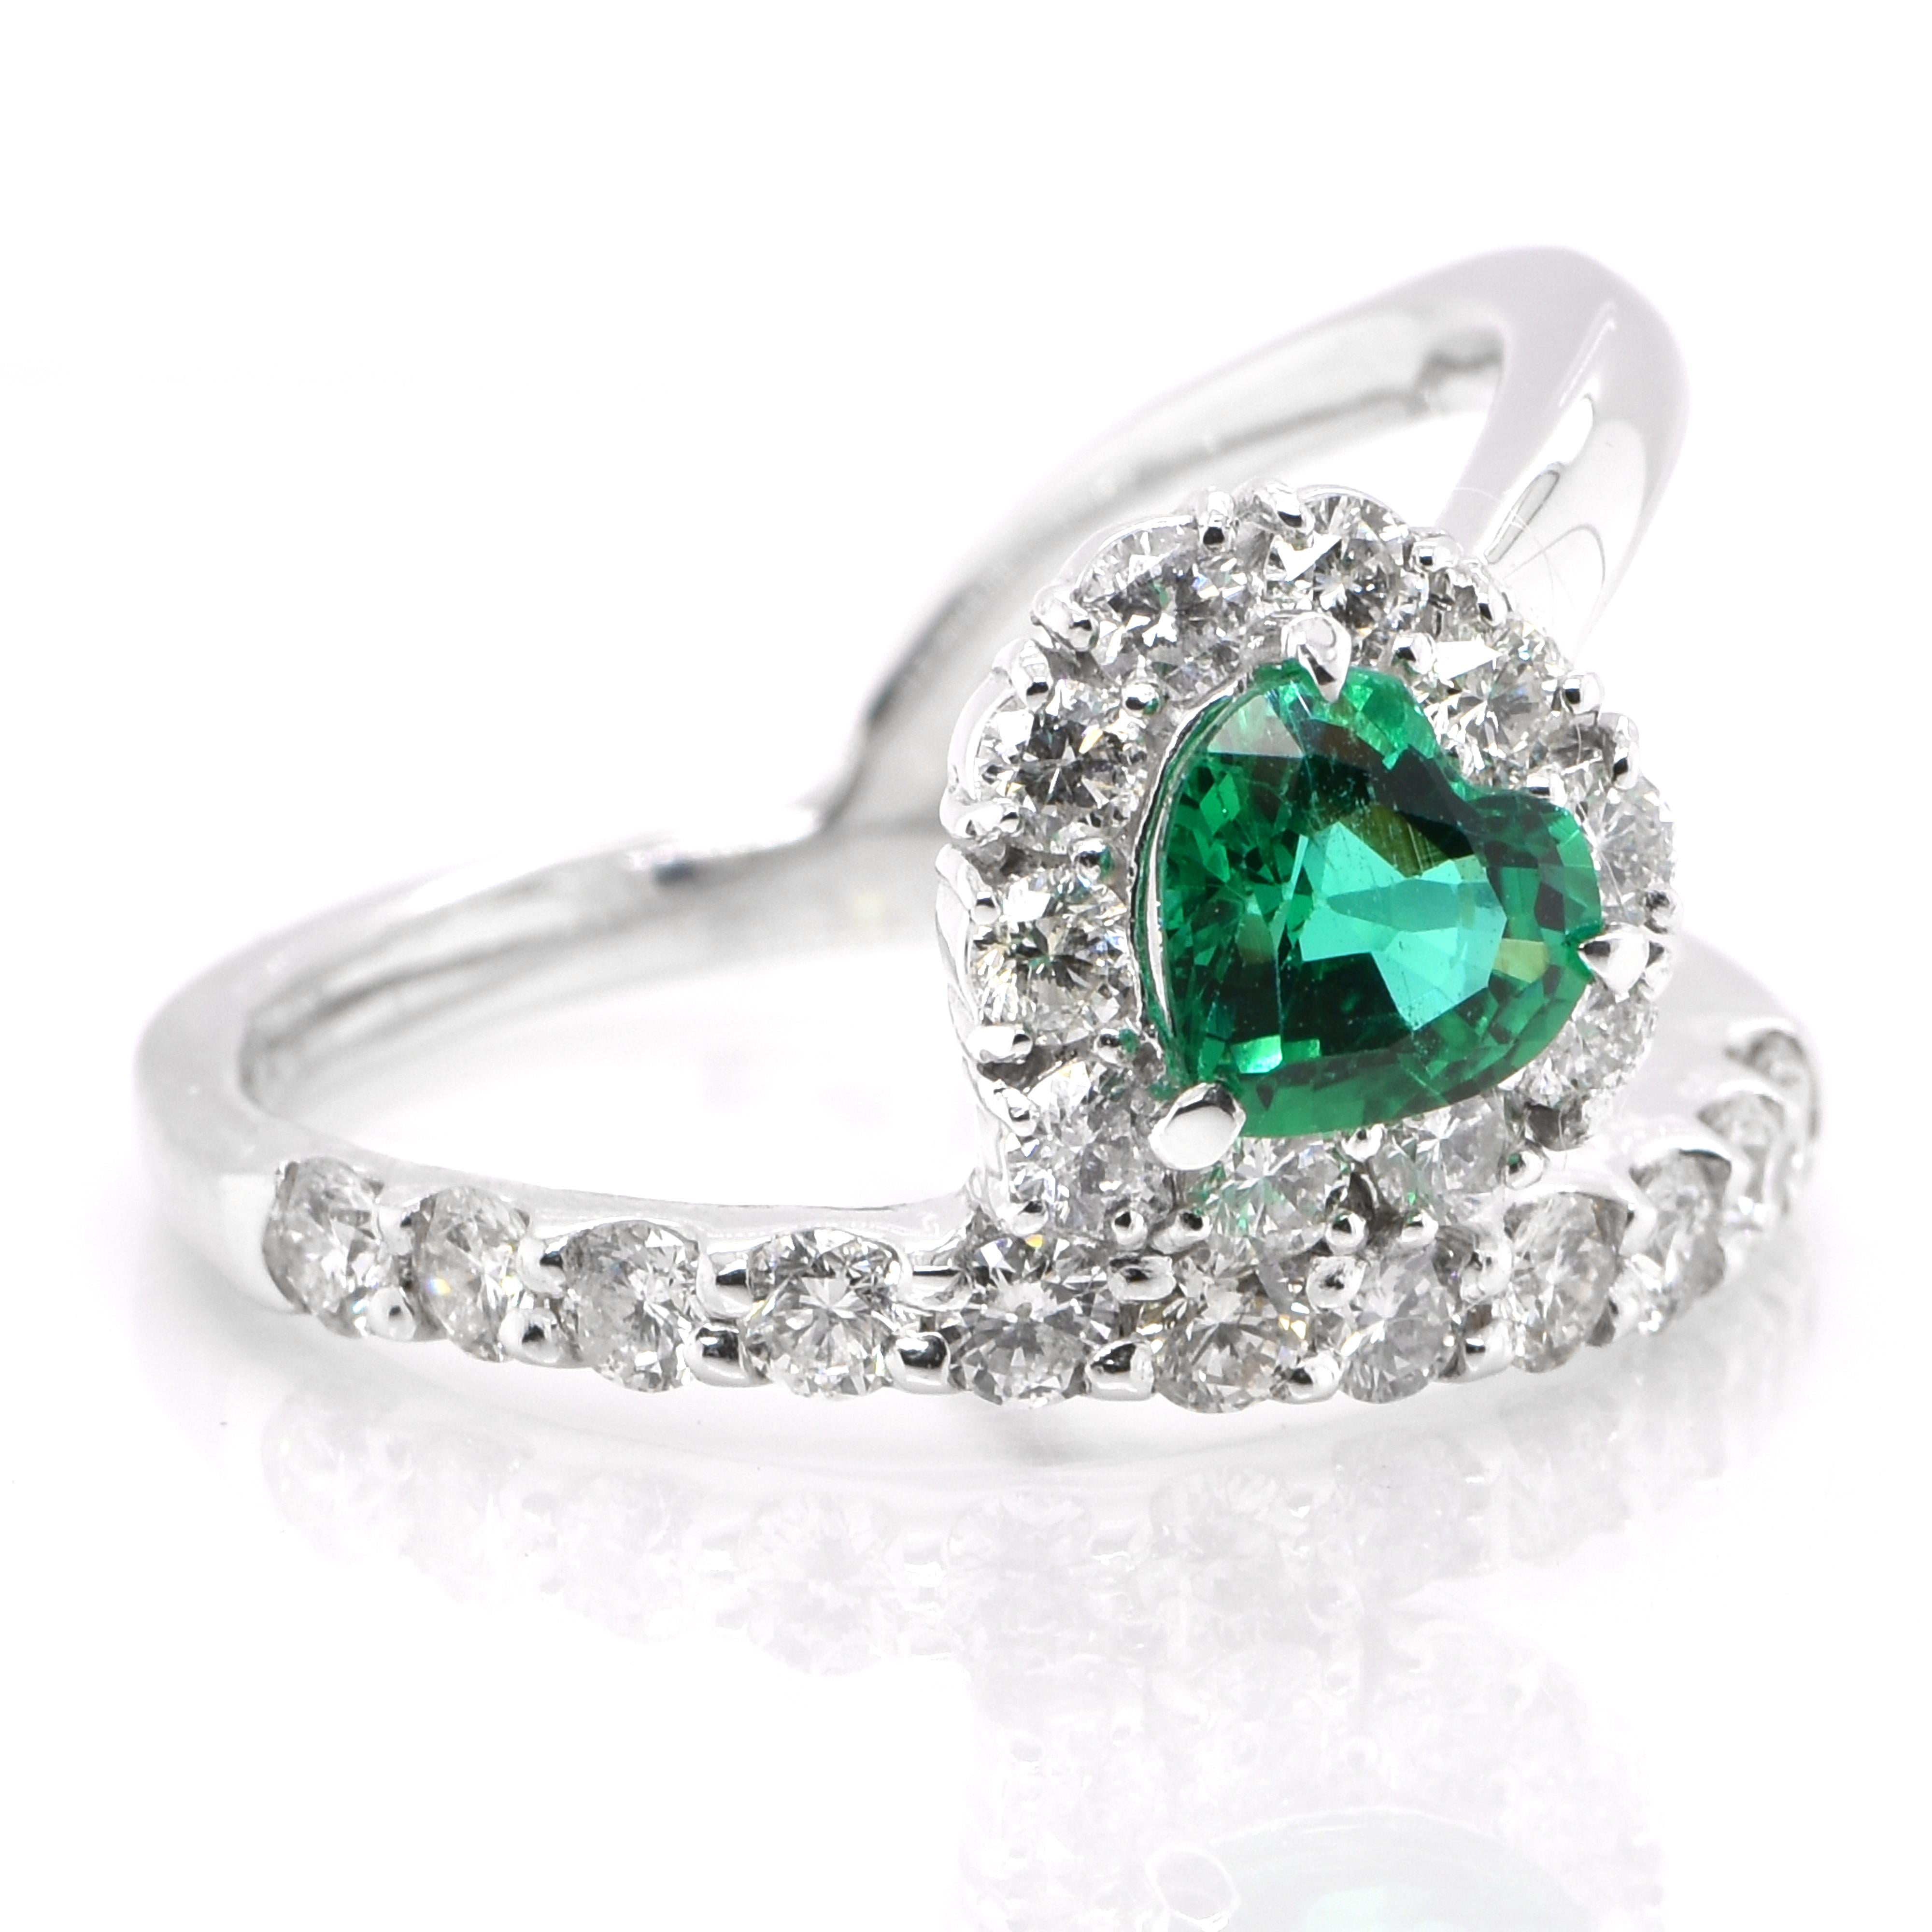 Modern 0.85 Carat Natural, Heart-Cut, Zambian Emerald and Diamond Ring Set in Platinum